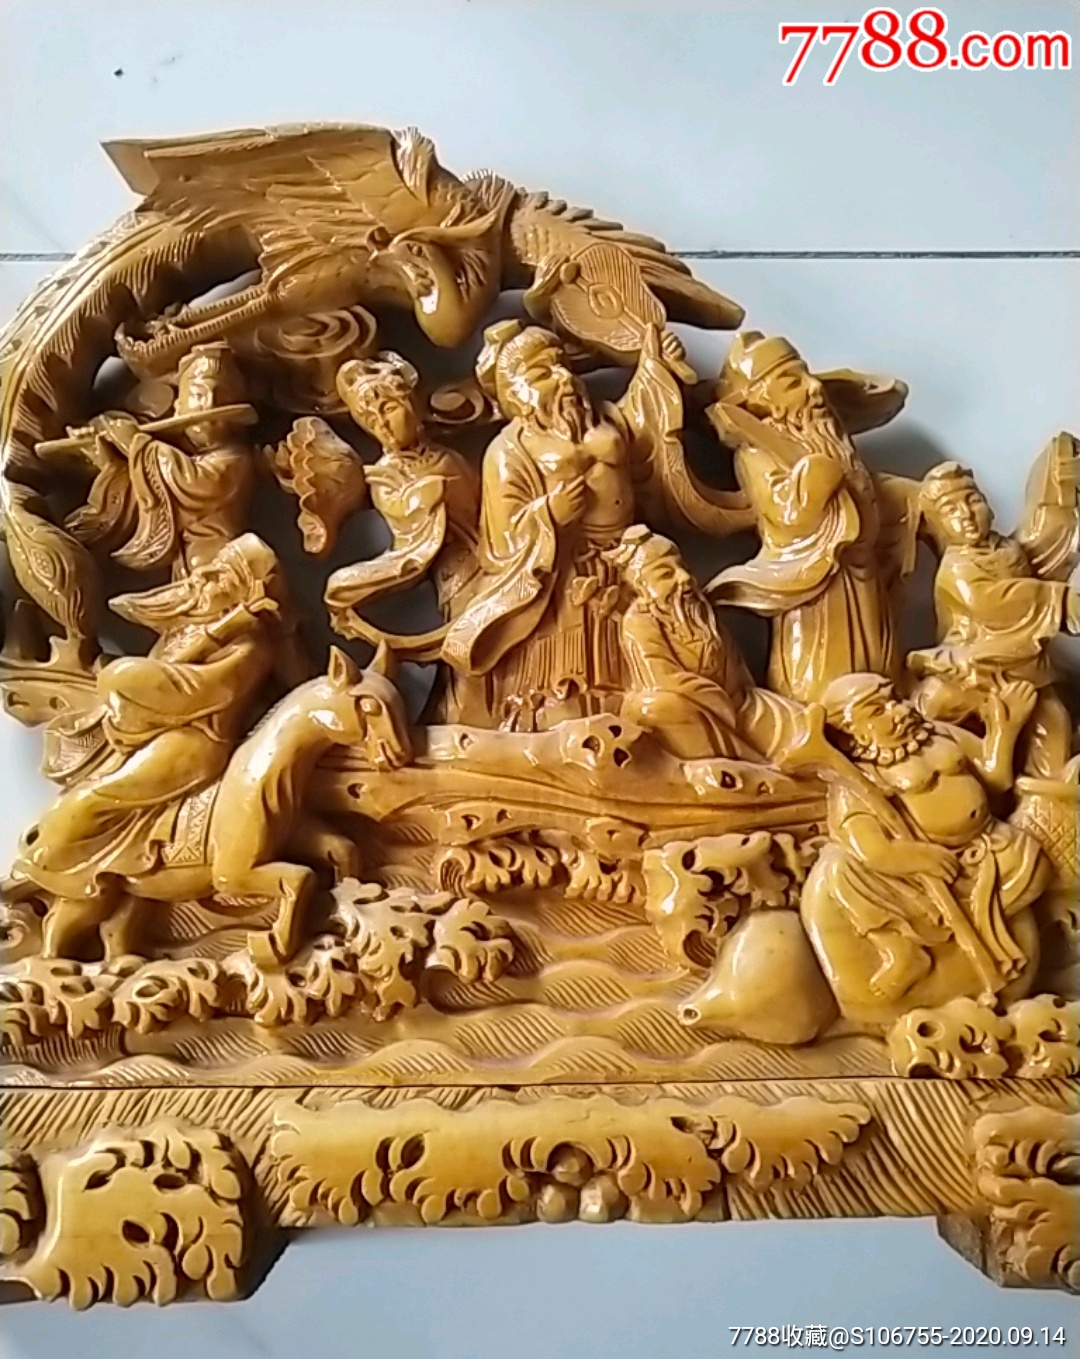 大型木雕摆件八仙过海